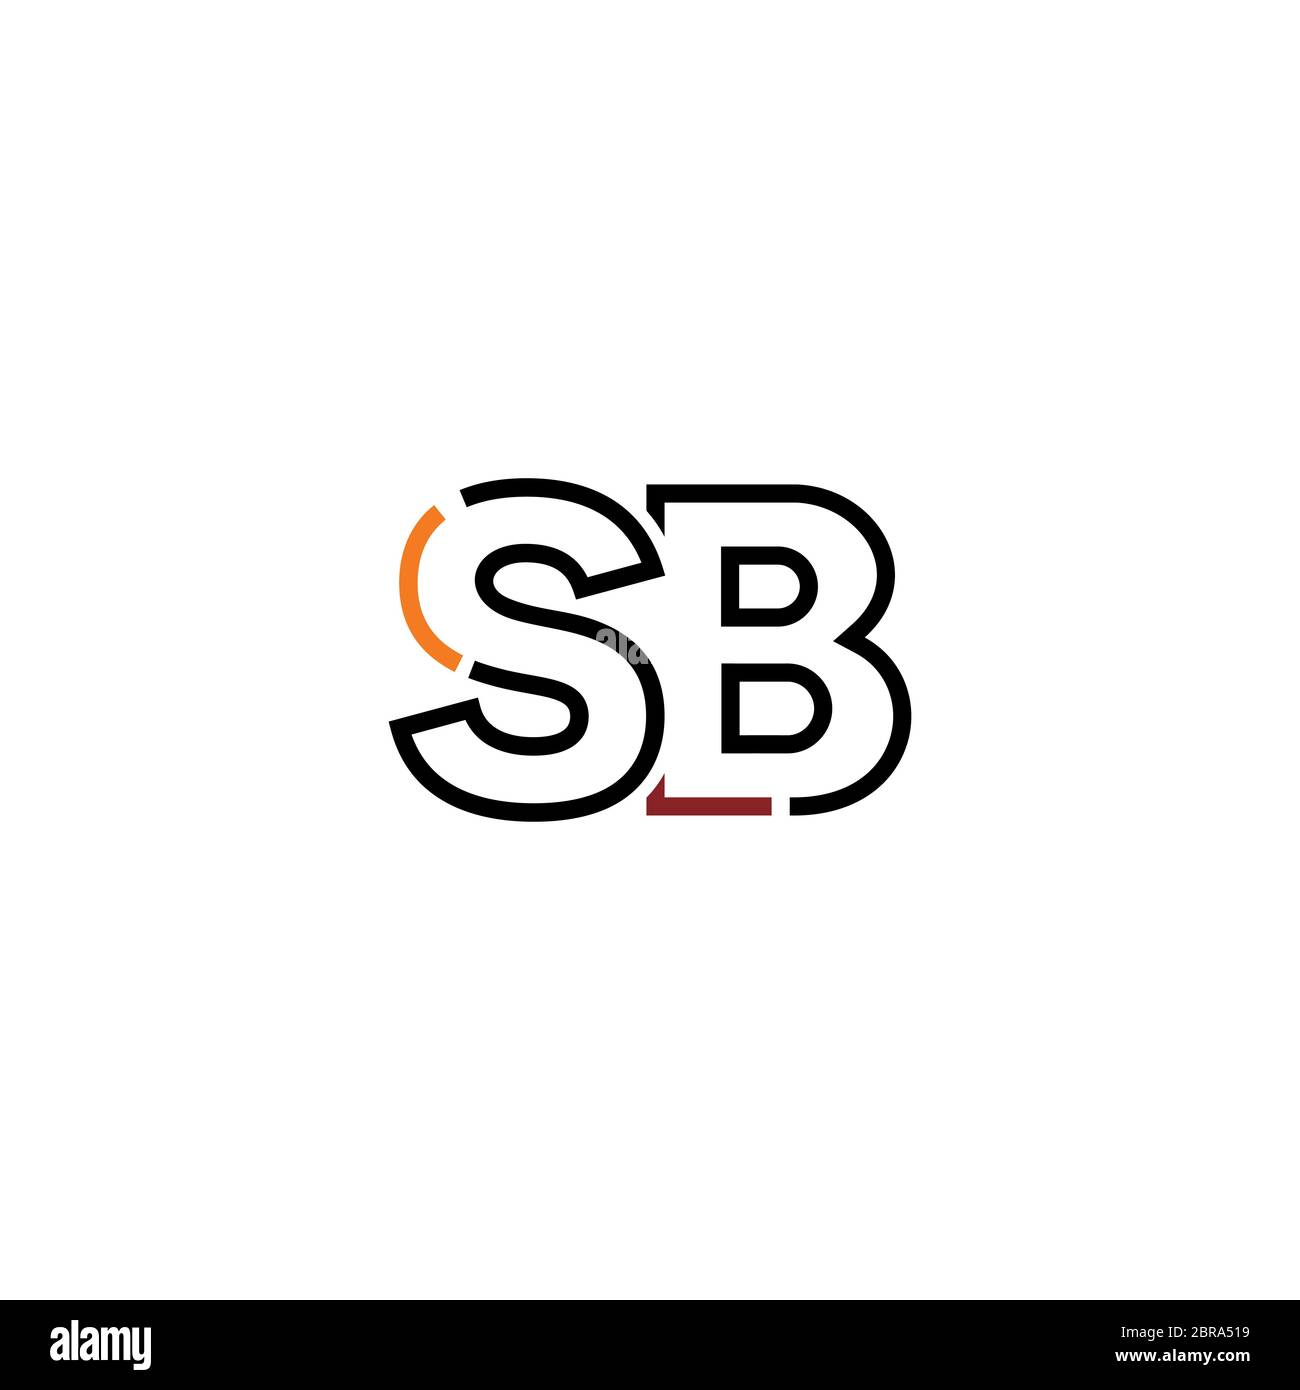 S b logo Imágenes recortadas de stock - Alamy